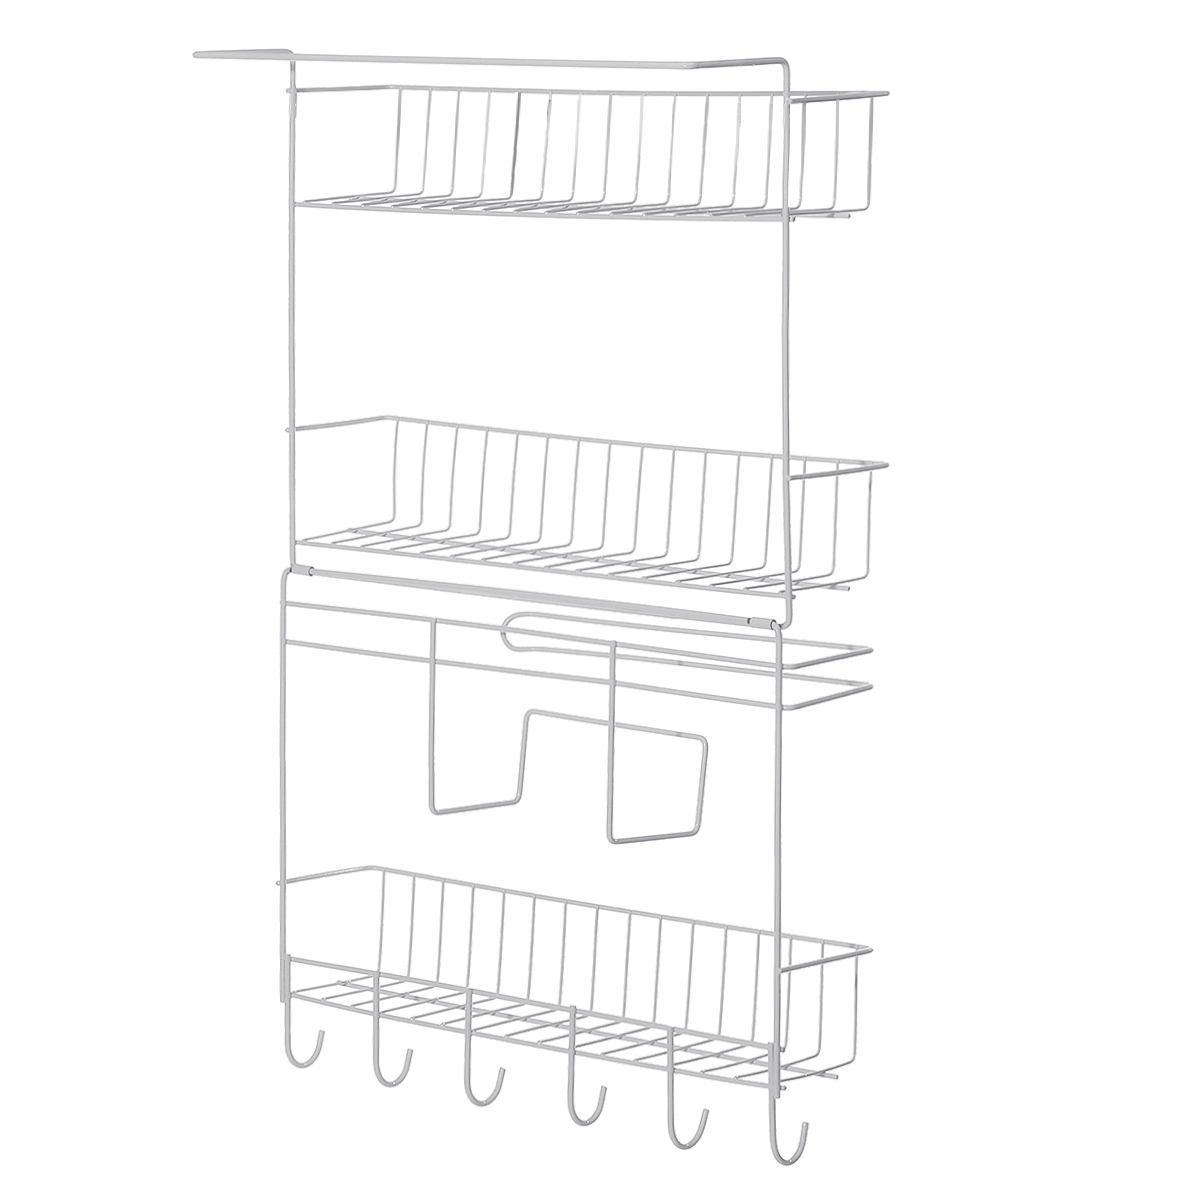 Wall-Shelf-Hanging-Storage-Rack-Storage-Organizer-Shelf-Free-Carbon-Steel-Storage-Shelves-Rack-for-K-1734029-8